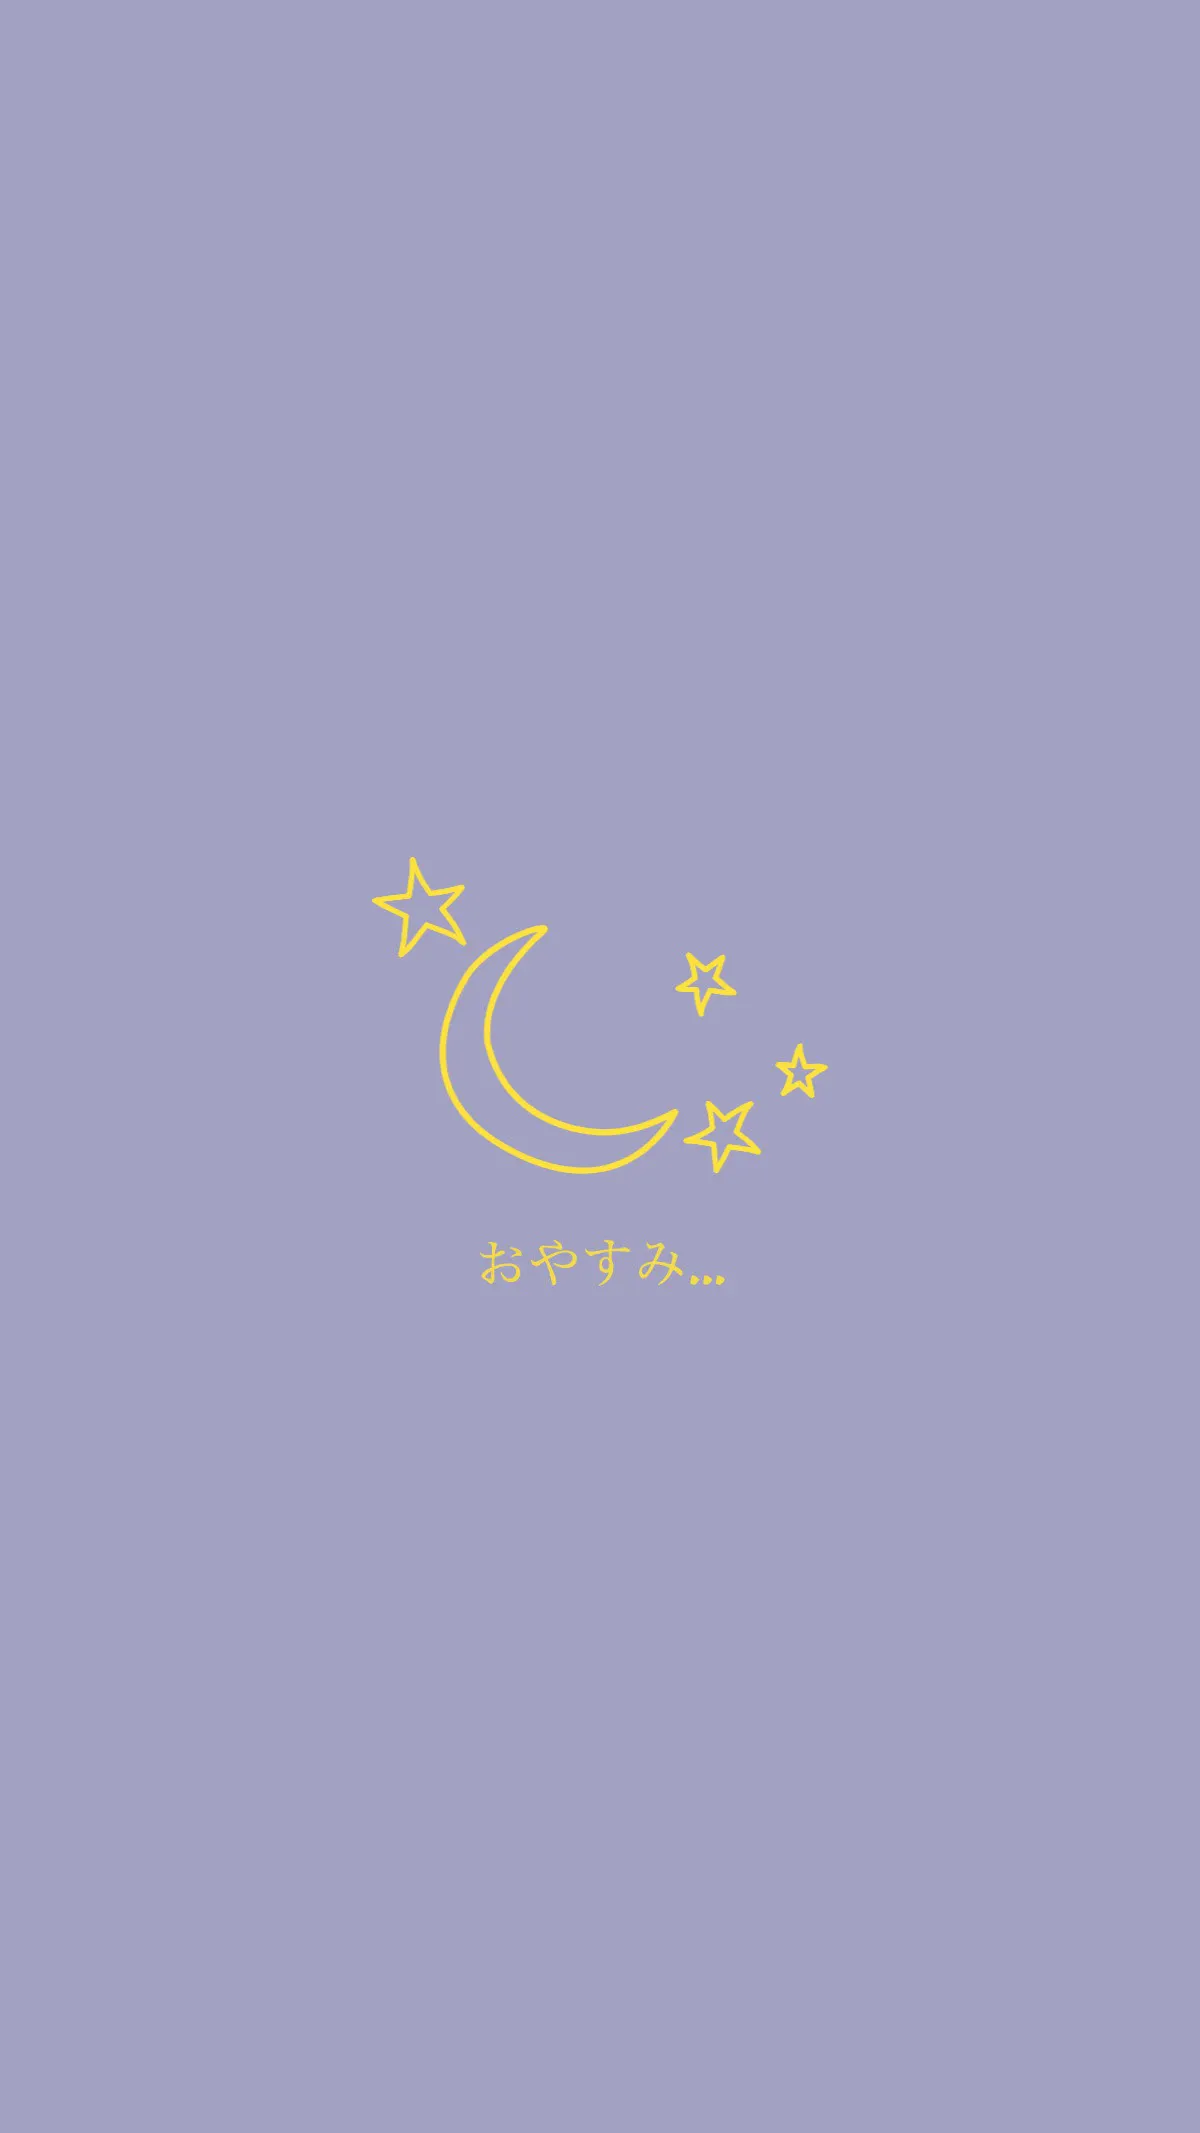 Good night moon star purple sky